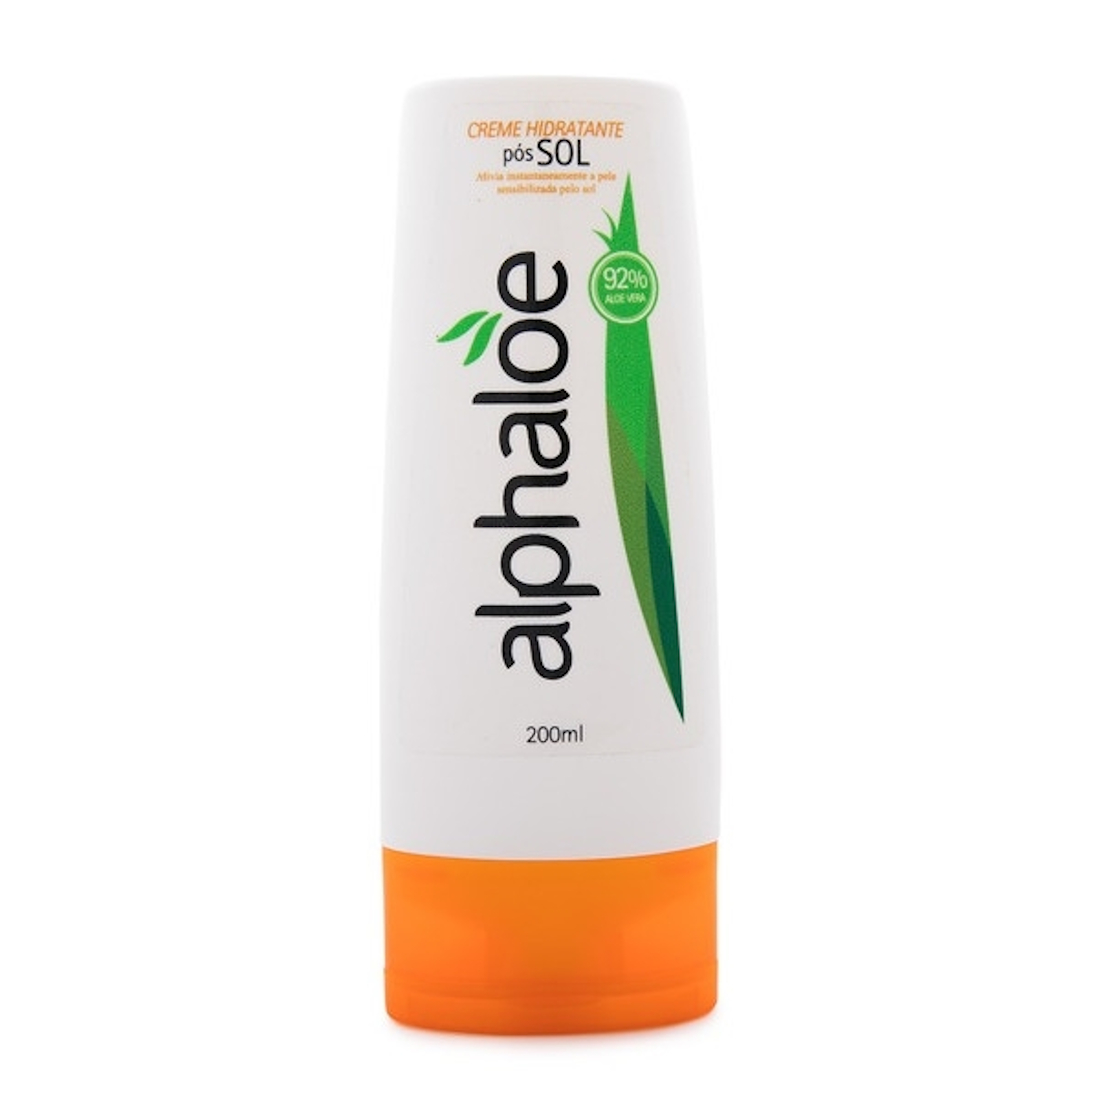 Creme Hidratante Pós Sol de Aloe Vera 200ml